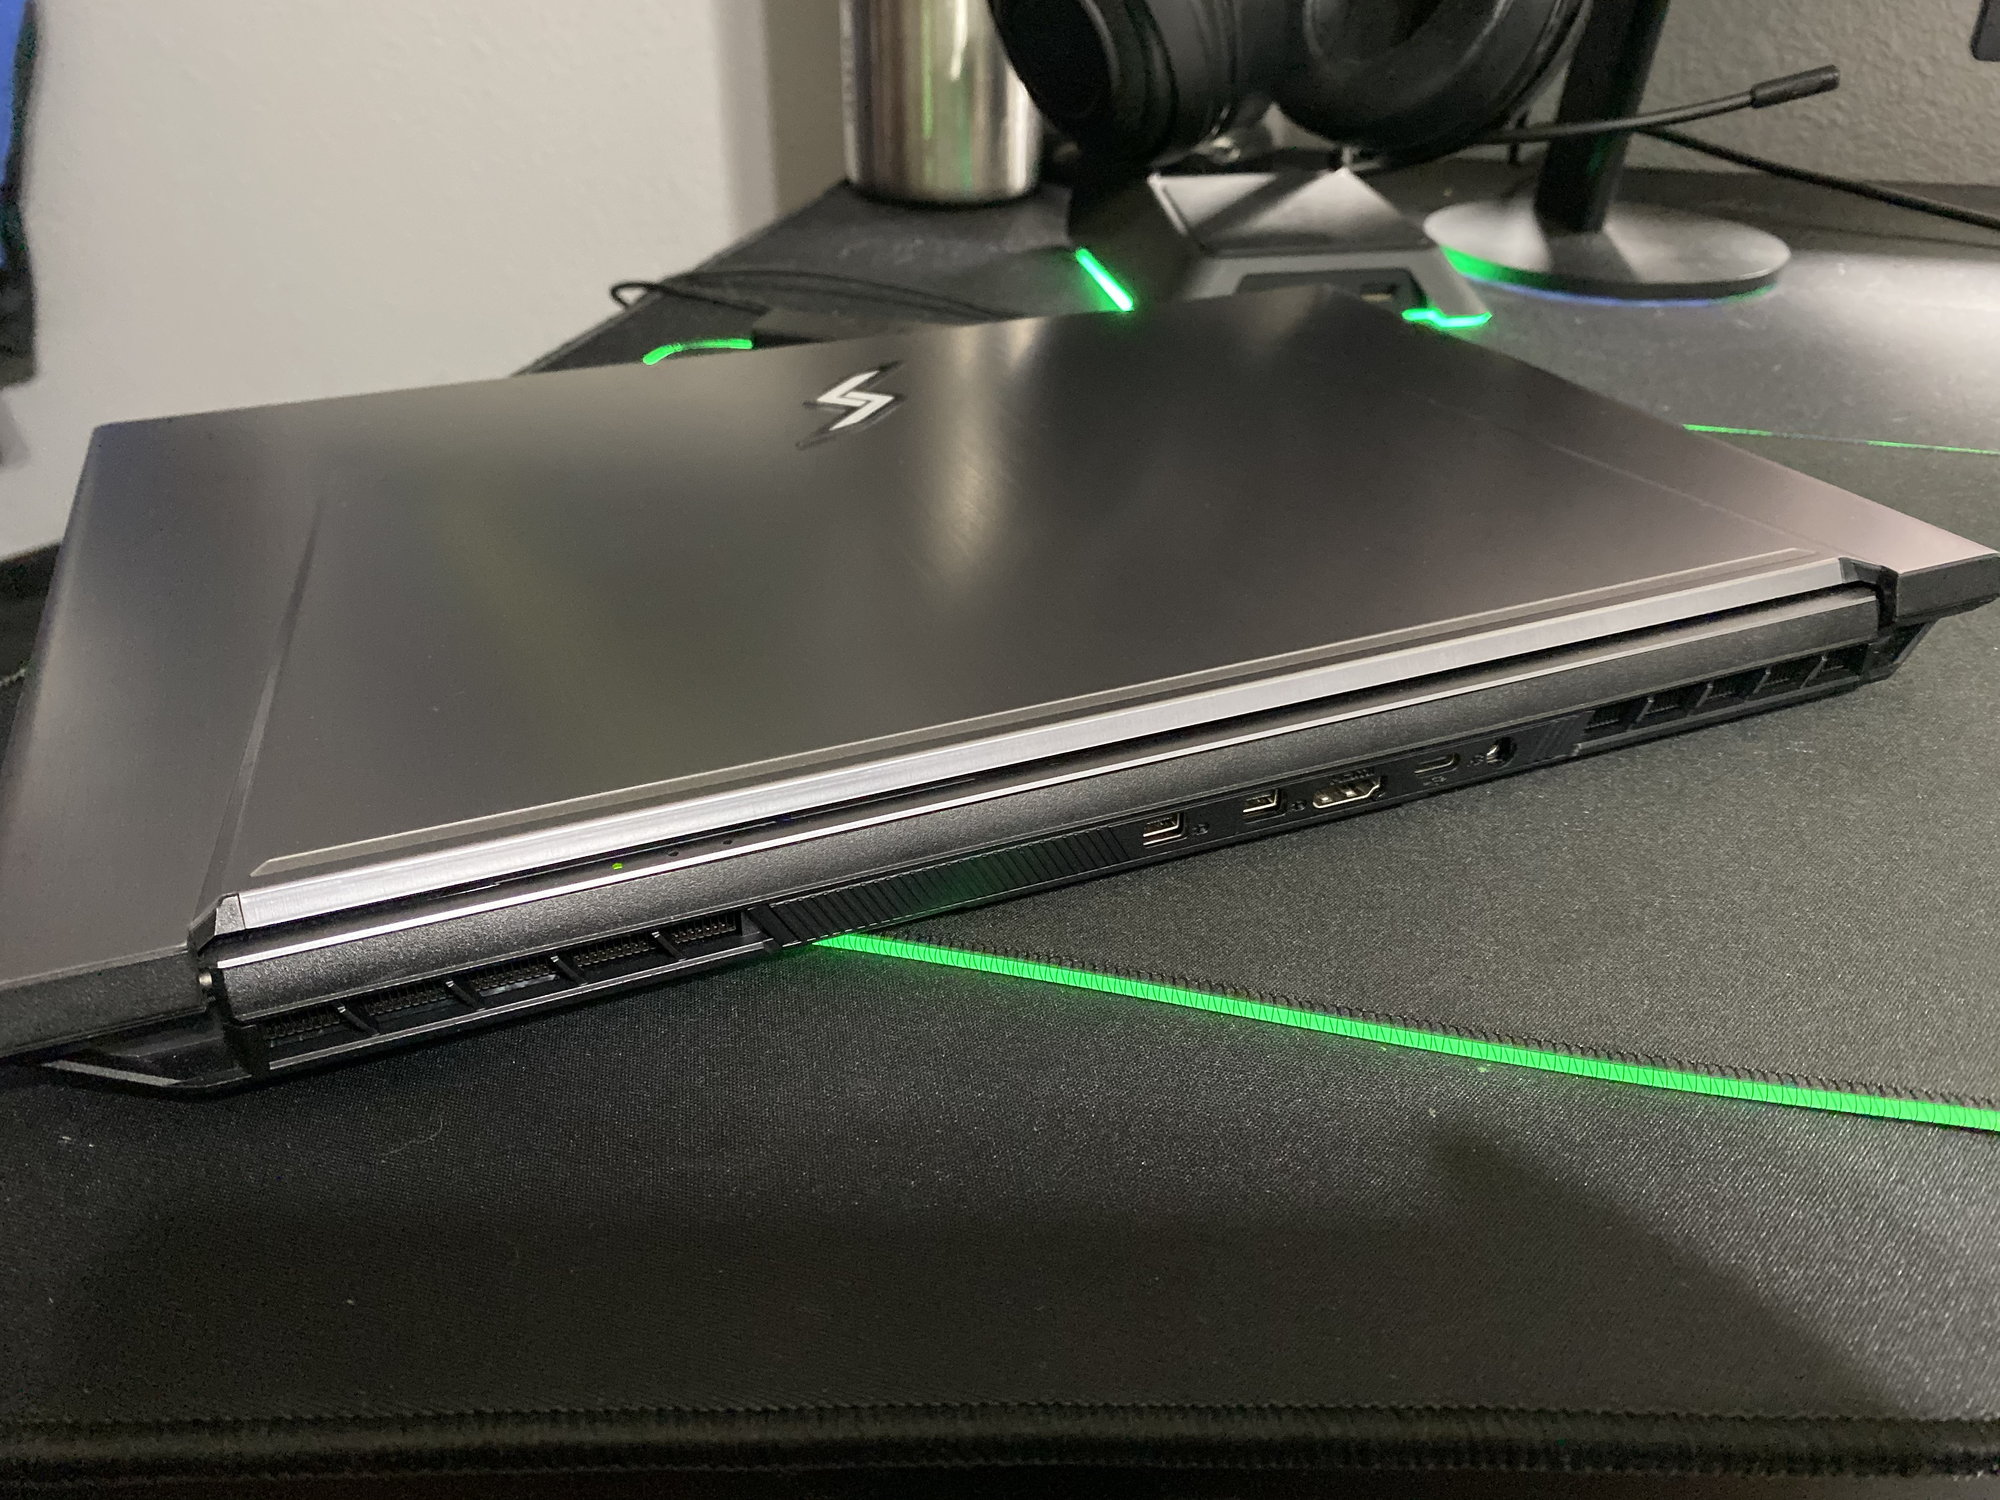 DigitalStorm Nova Gaming Laptop RTX 2060 16gb 1TB 144hz - R/C Tech